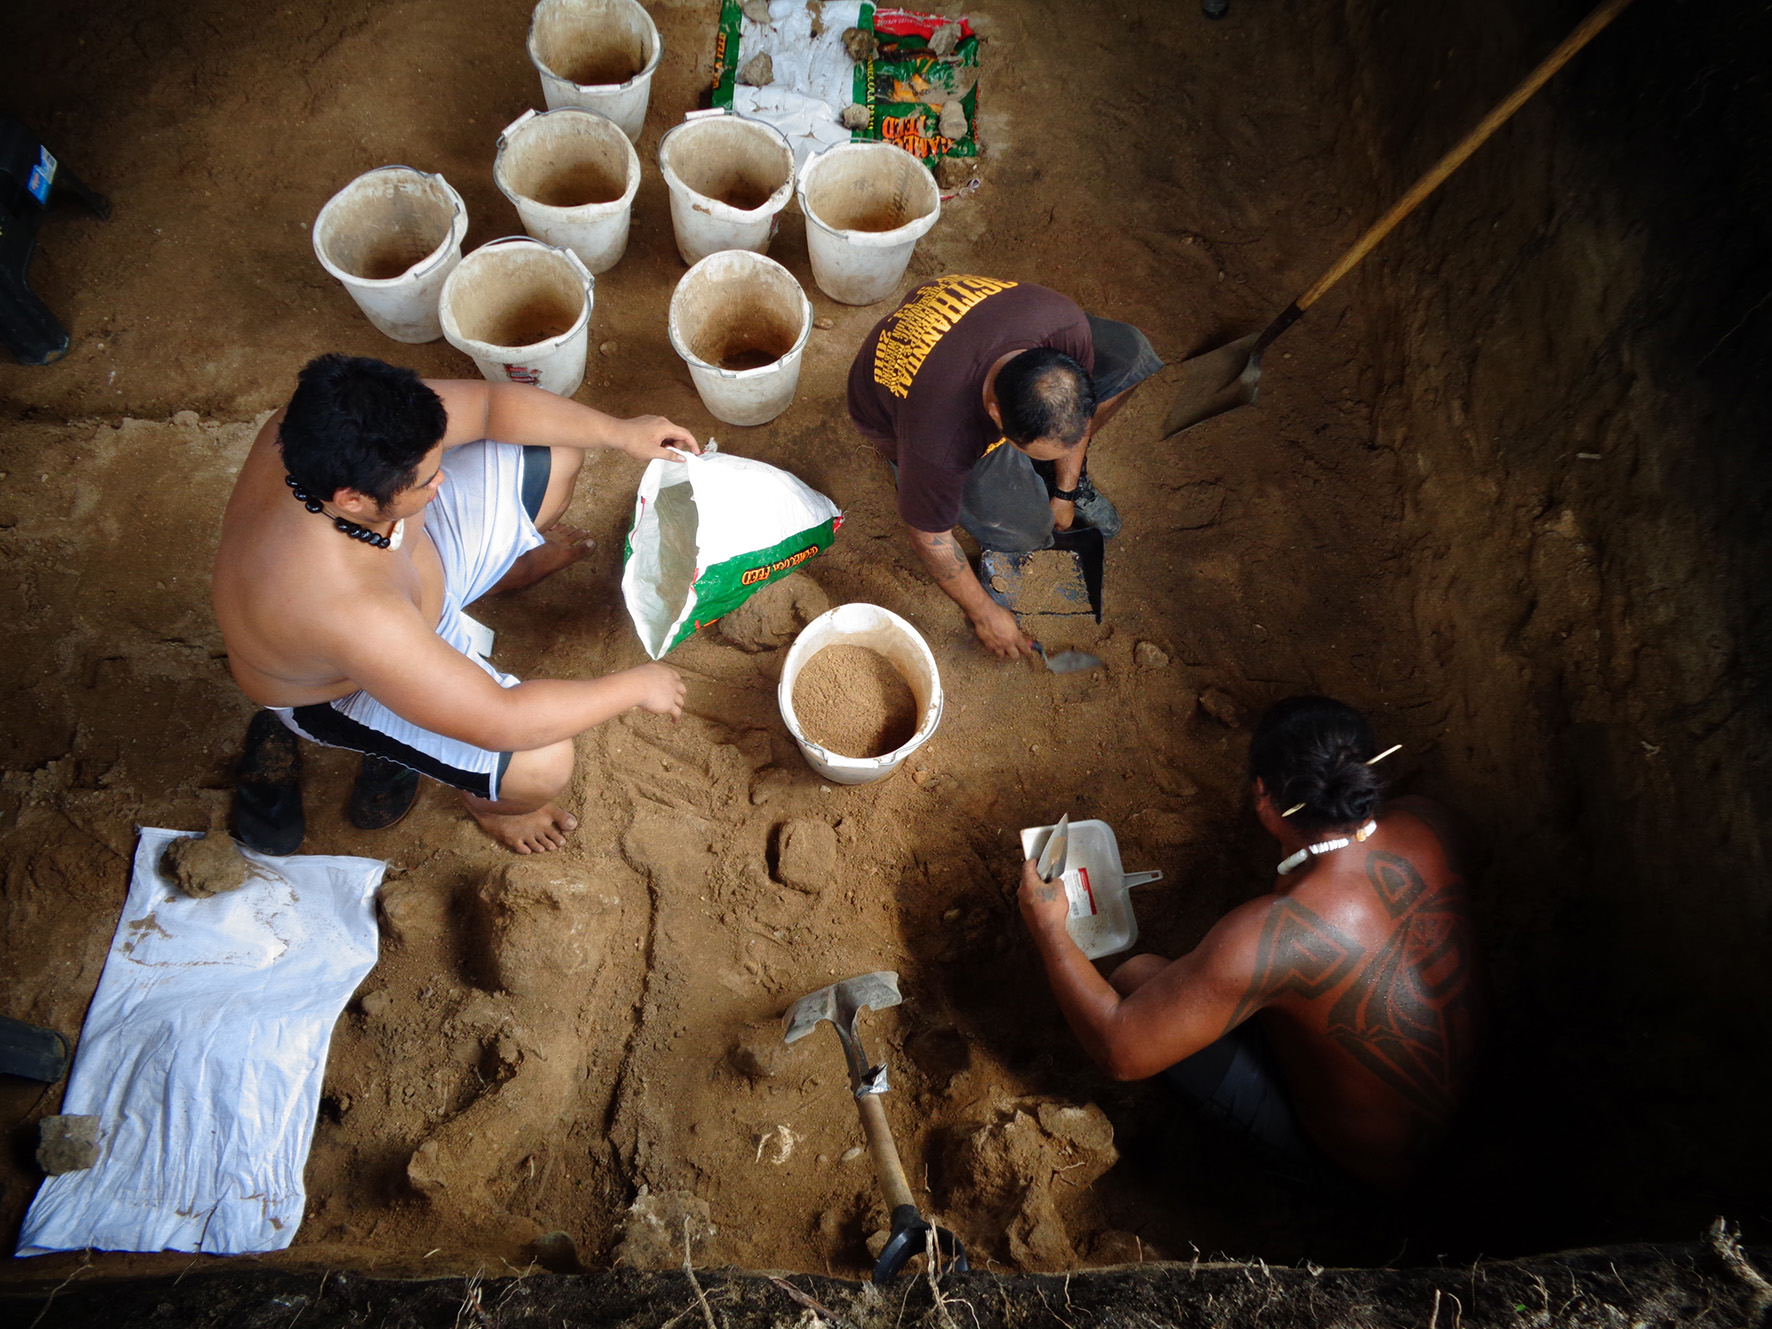 Field researchers work on artifacts found at Unai Bapot